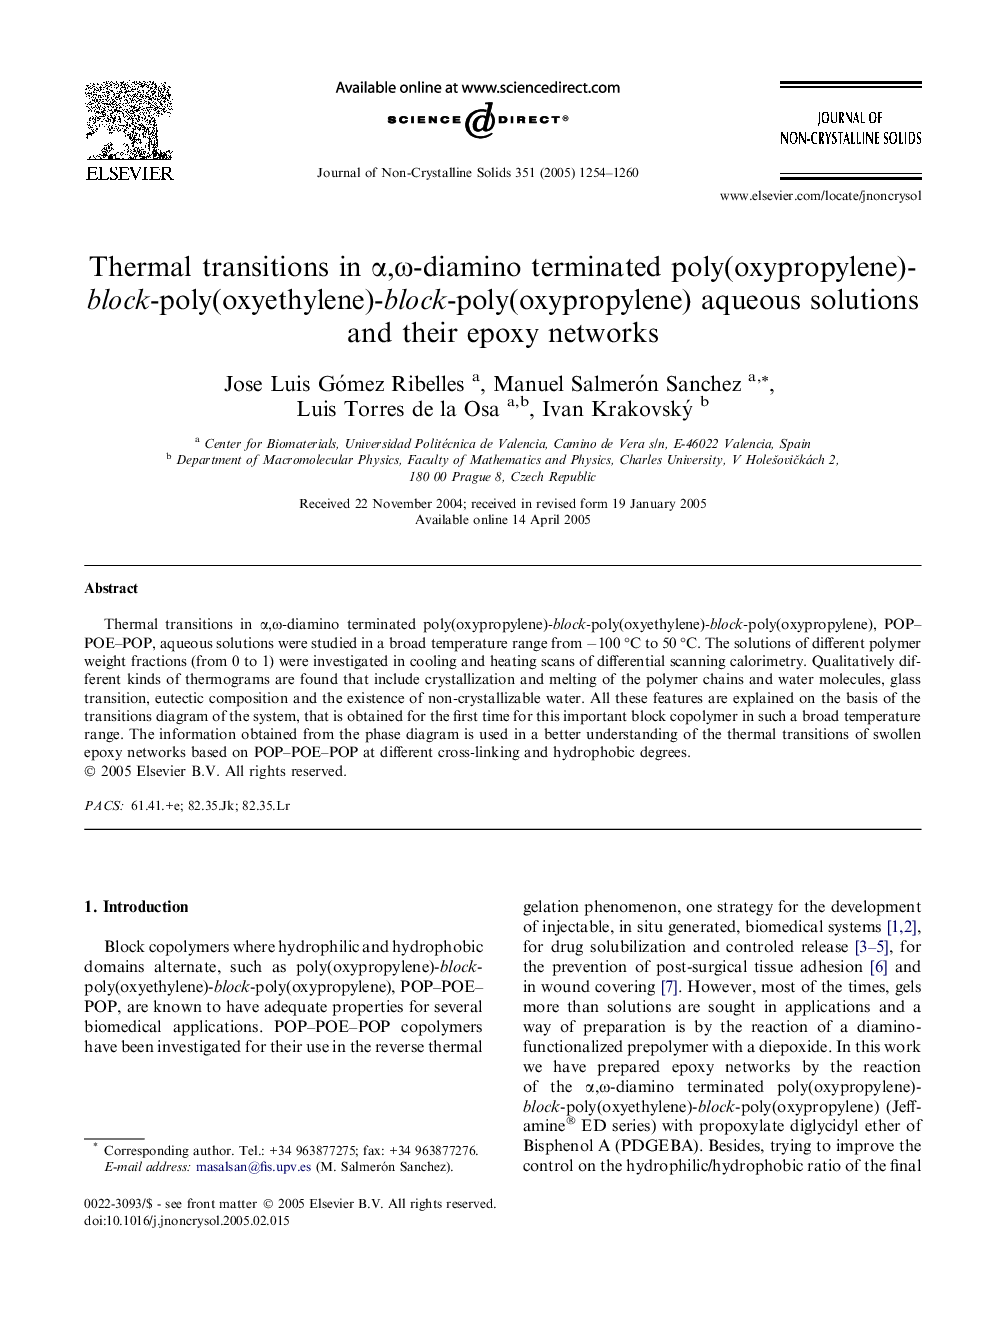 Thermal transitions in Î±,Ï-diamino terminated poly(oxypropylene)-block-poly(oxyethylene)-block-poly(oxypropylene) aqueous solutions and their epoxy networks